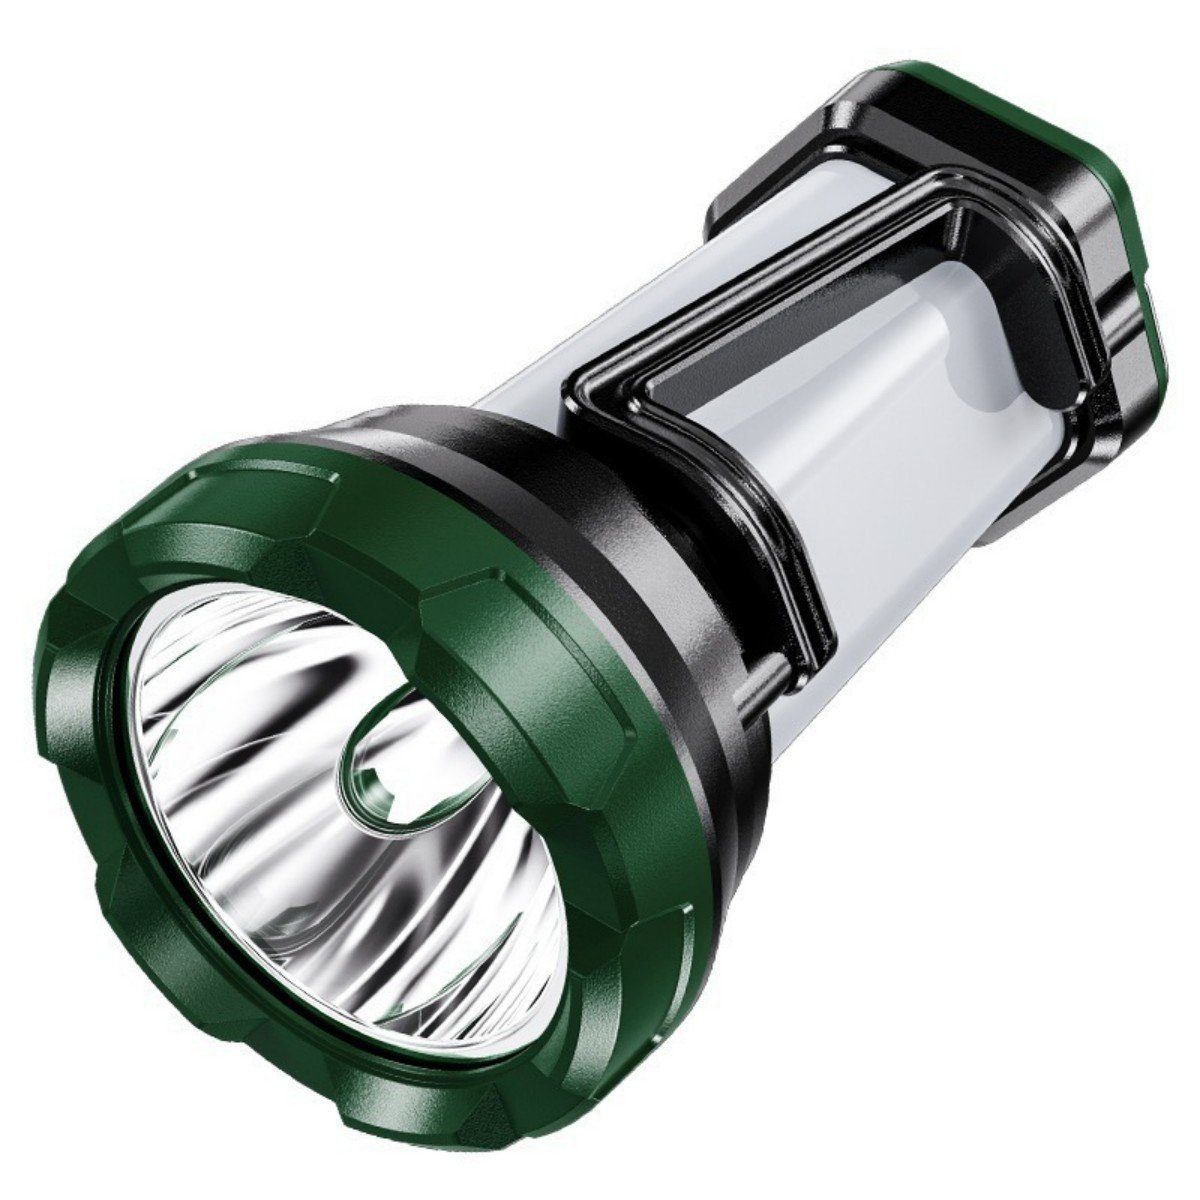 DOPWii Taschenlampe Tragbare Ultrahelle LED-Taschenlampe Campinglampe 6 Lichtmodi